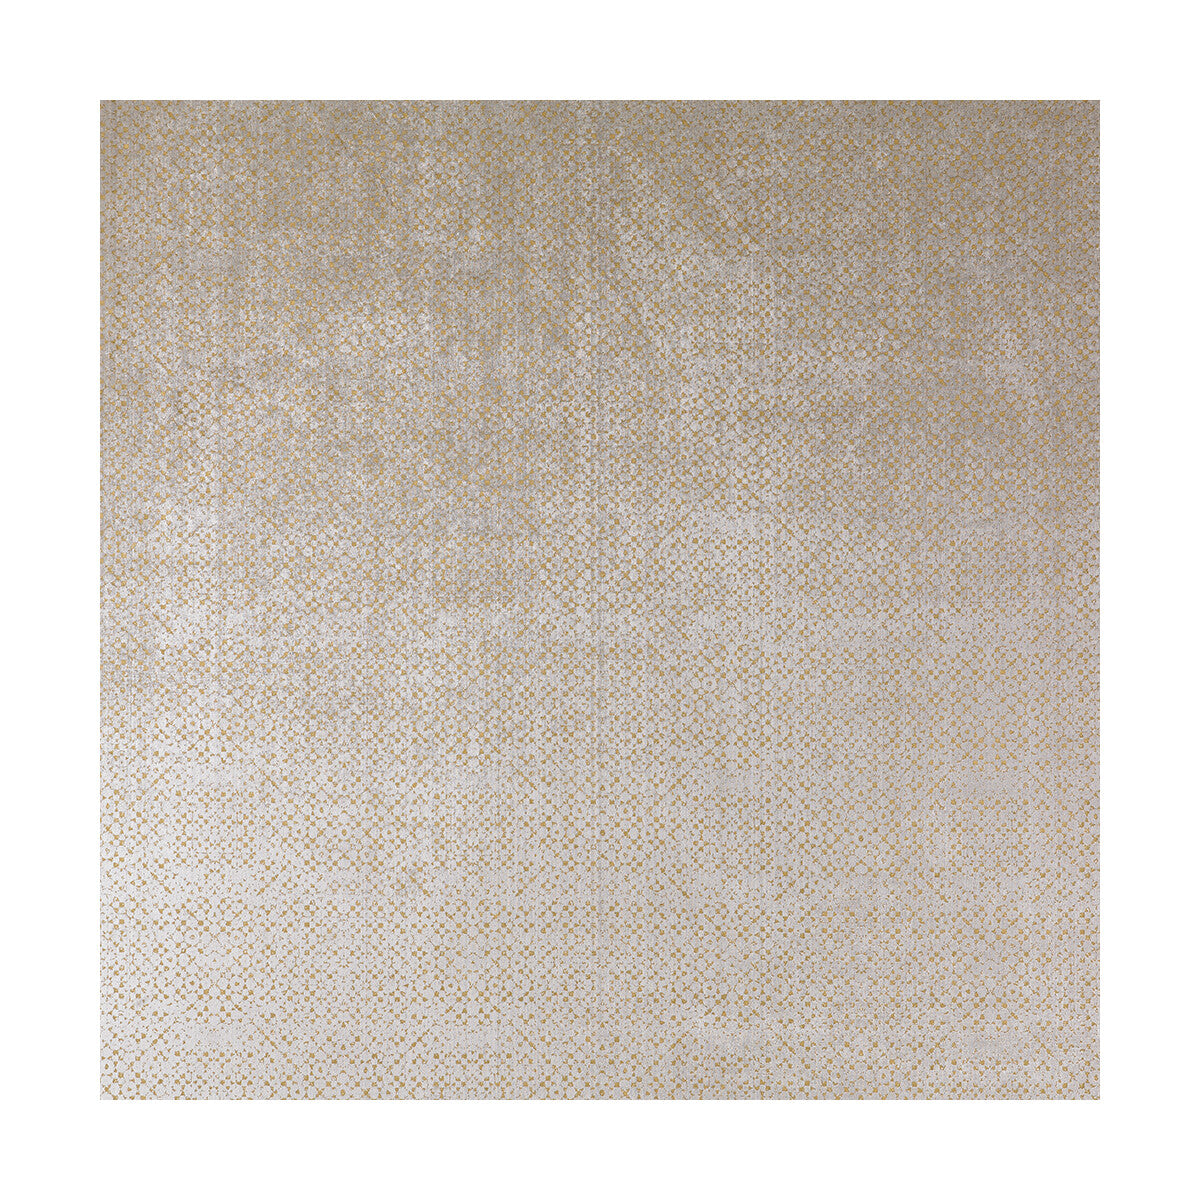 Abeu fabric in oro/plata color - pattern LCT5368.003.0 - by Gaston y Daniela in the Lorenzo Castillo III collection